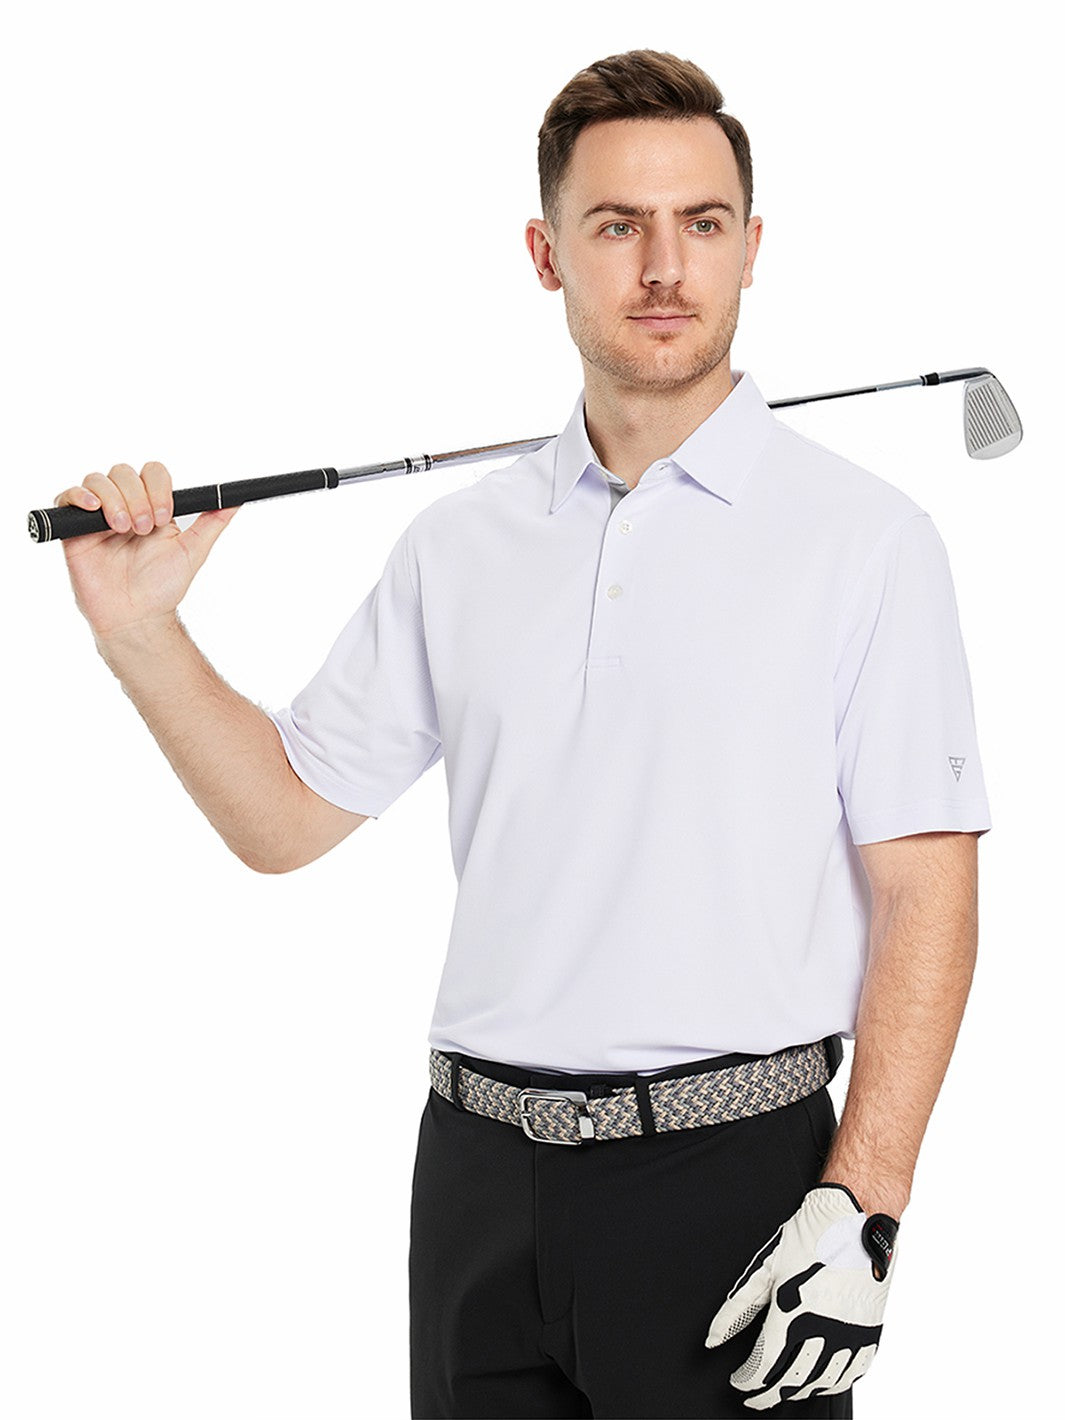 Men's Solid Pique Golf Shirts-White